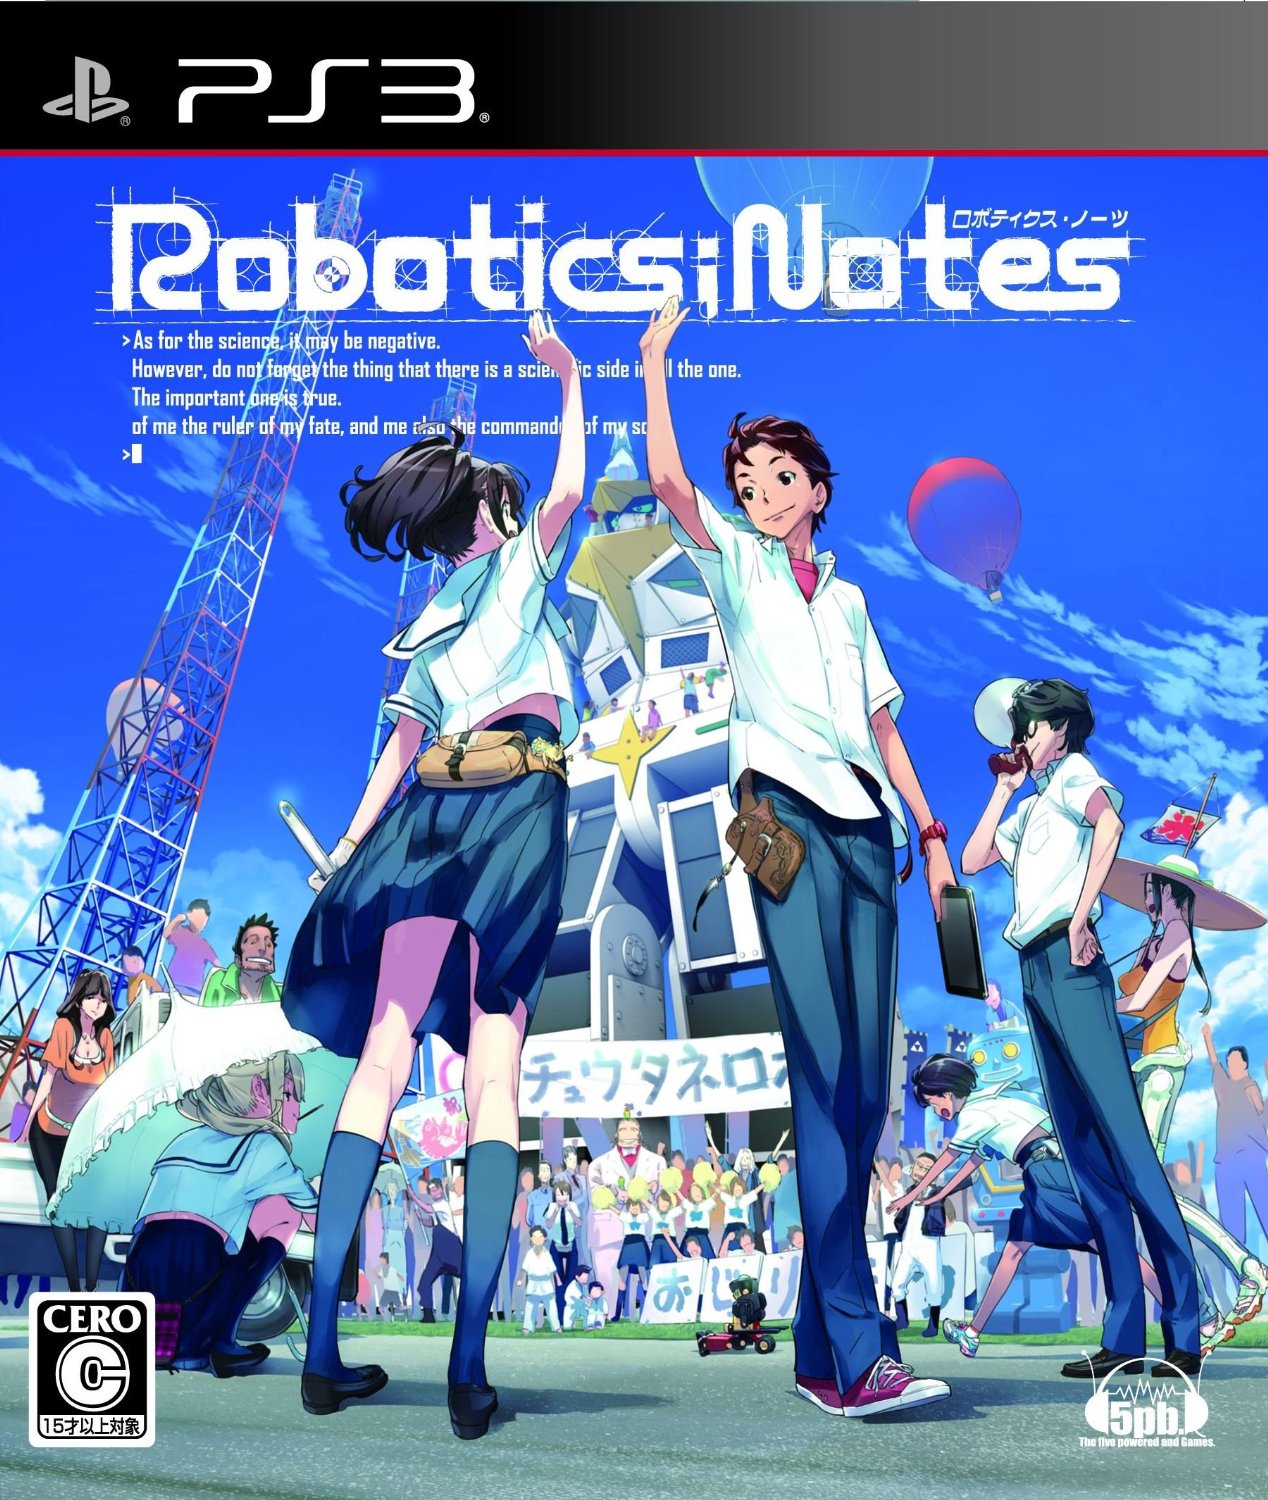 Robotics Notes PS3 package.jpg